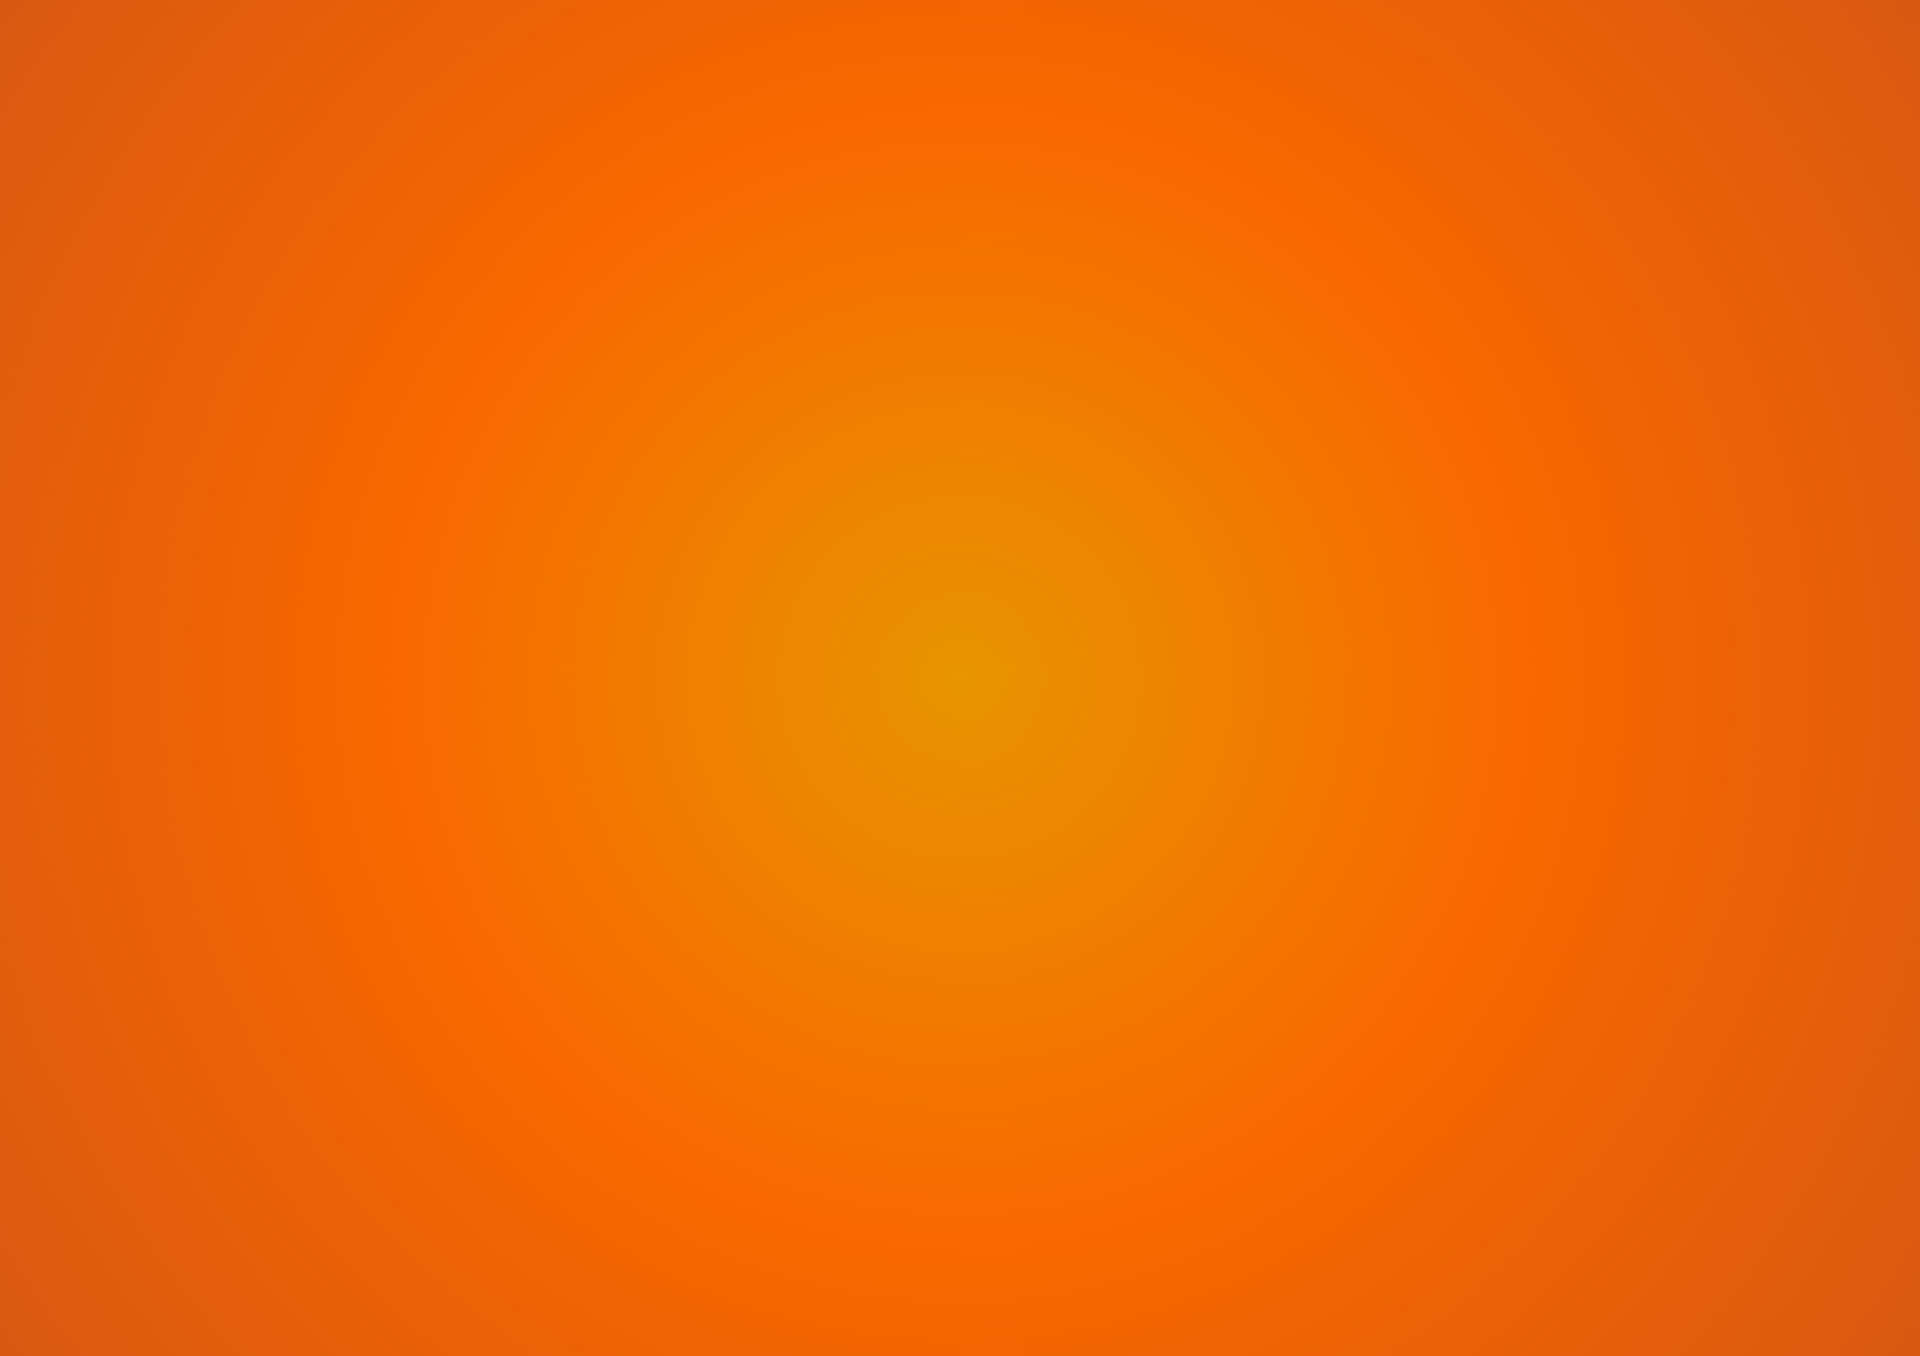 A vivid orange gradient background